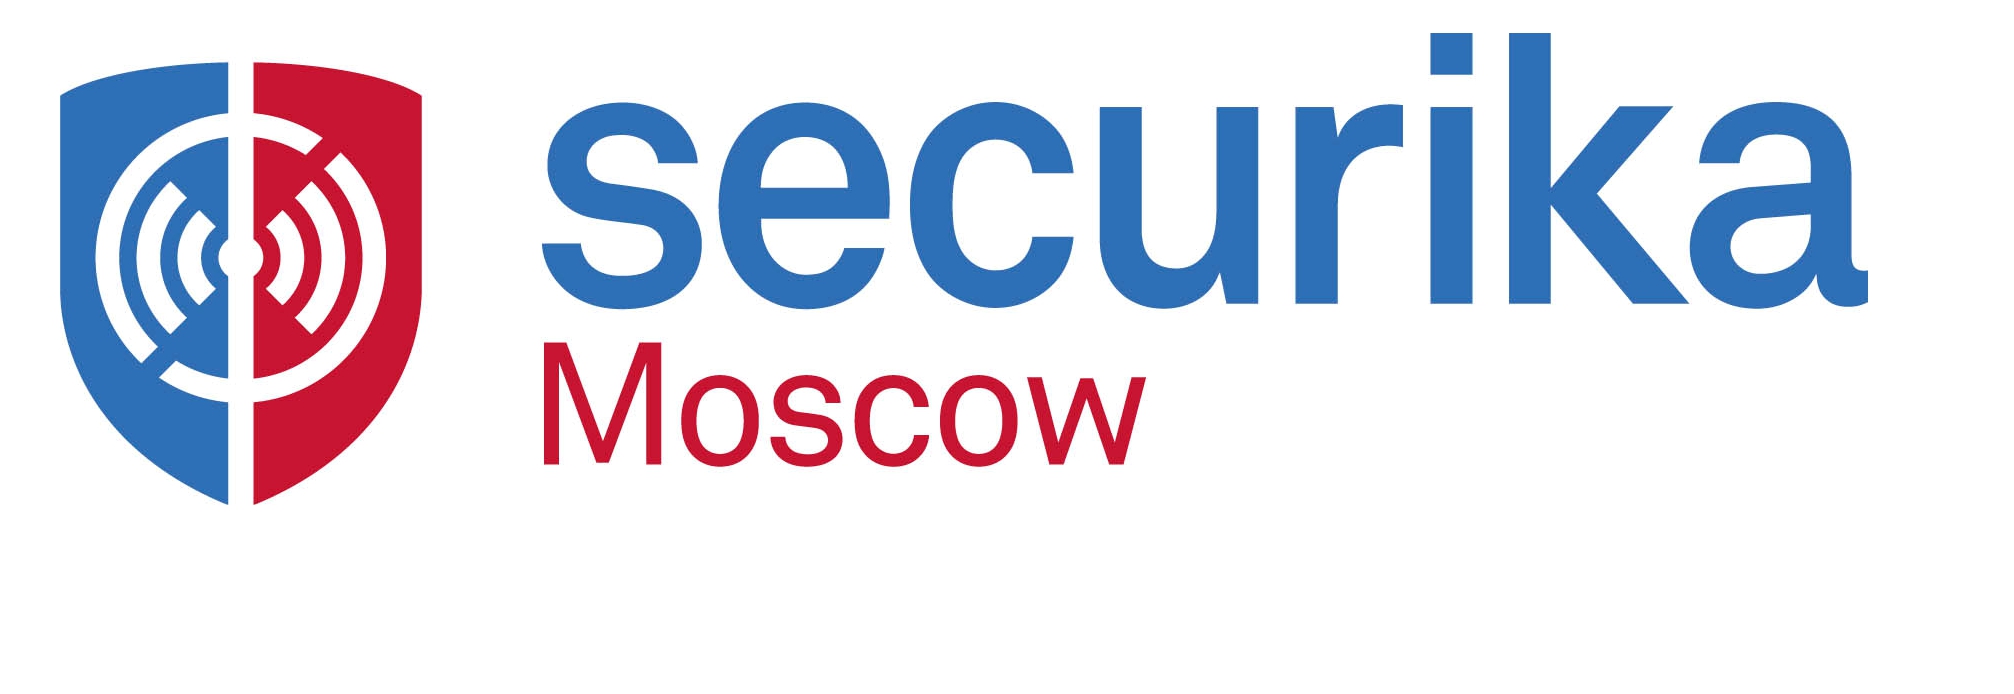 Securika Moscow-2021